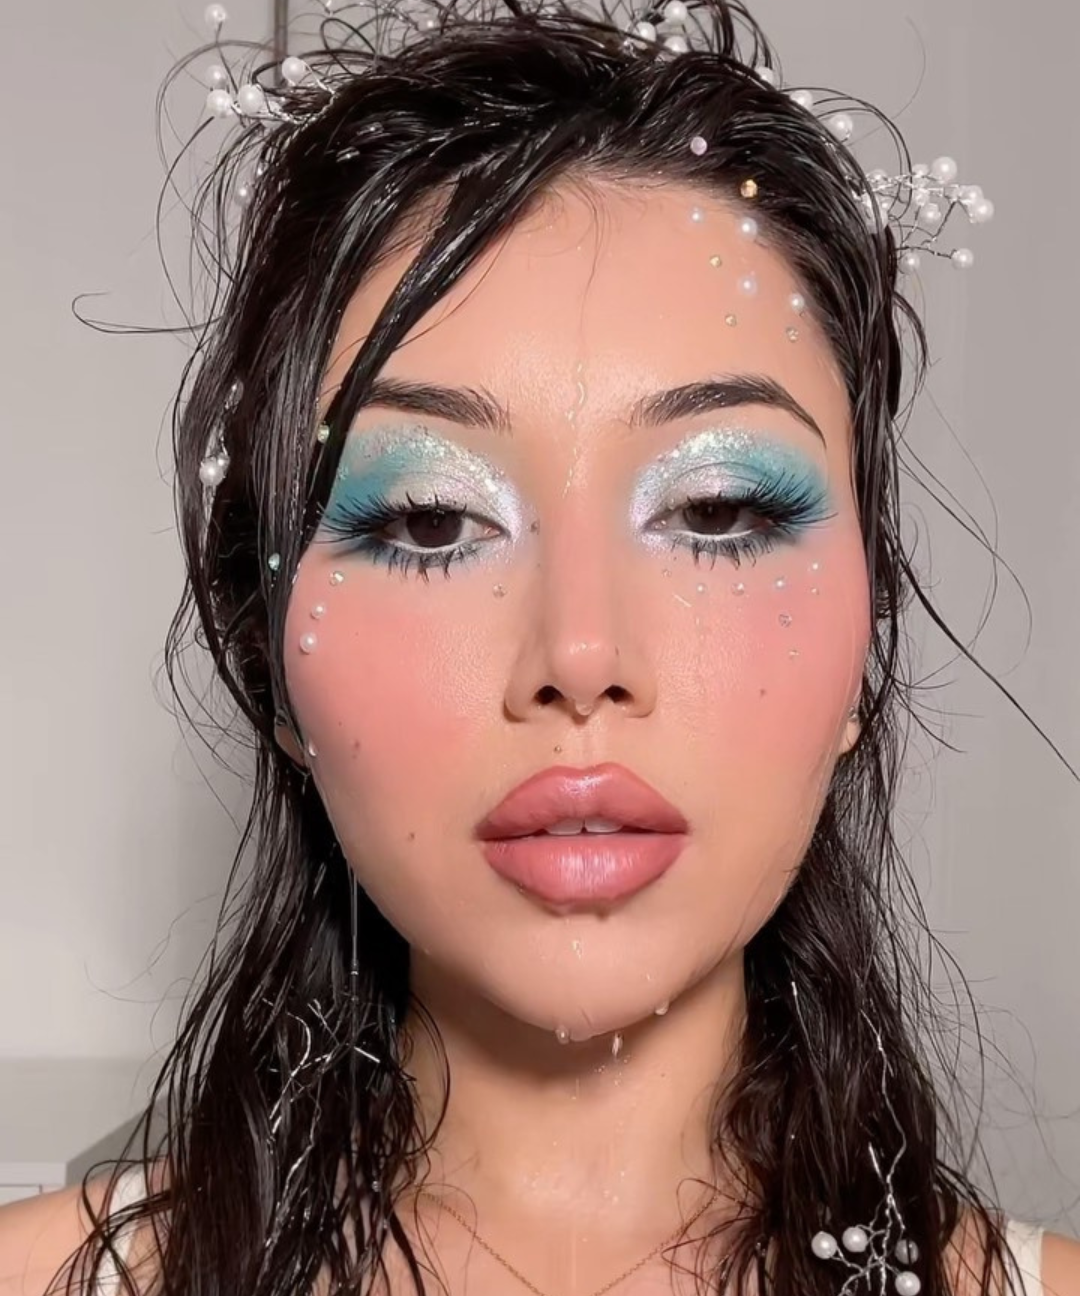 Billie Eilish Inspired A Viral Blue Makeup Trend